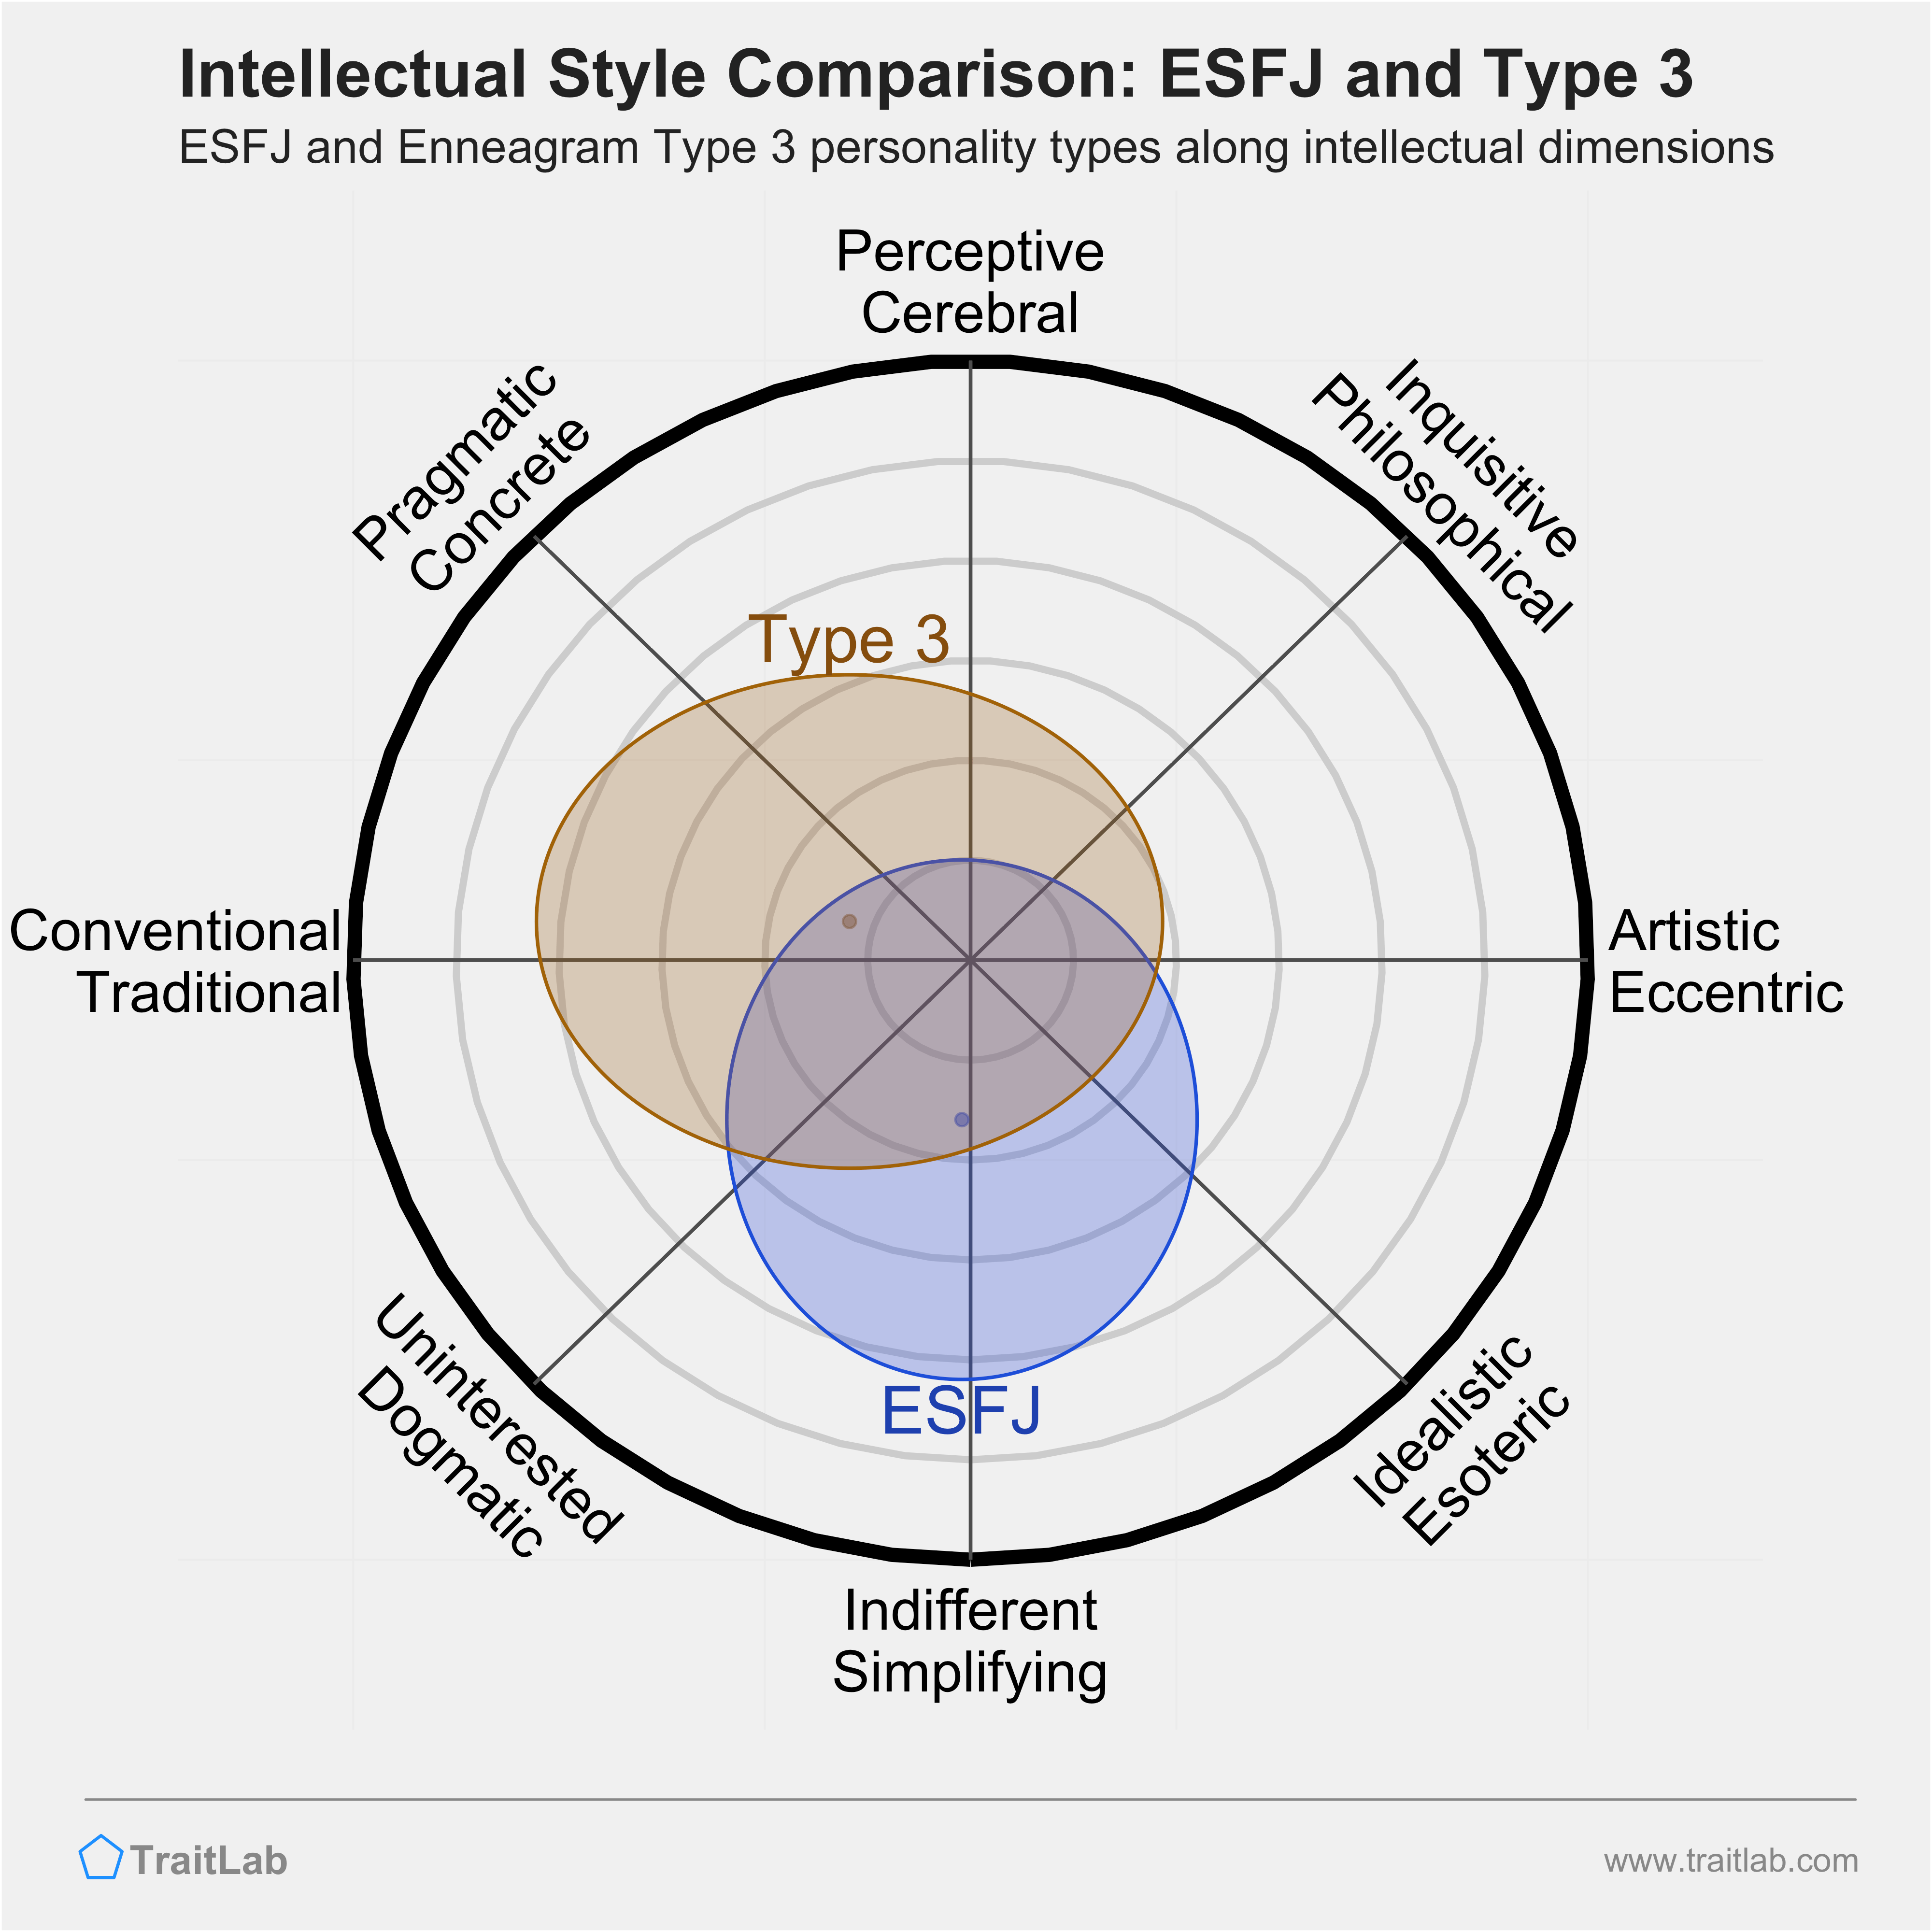 ESFJ and Type 3 comparison across intellectual dimensions